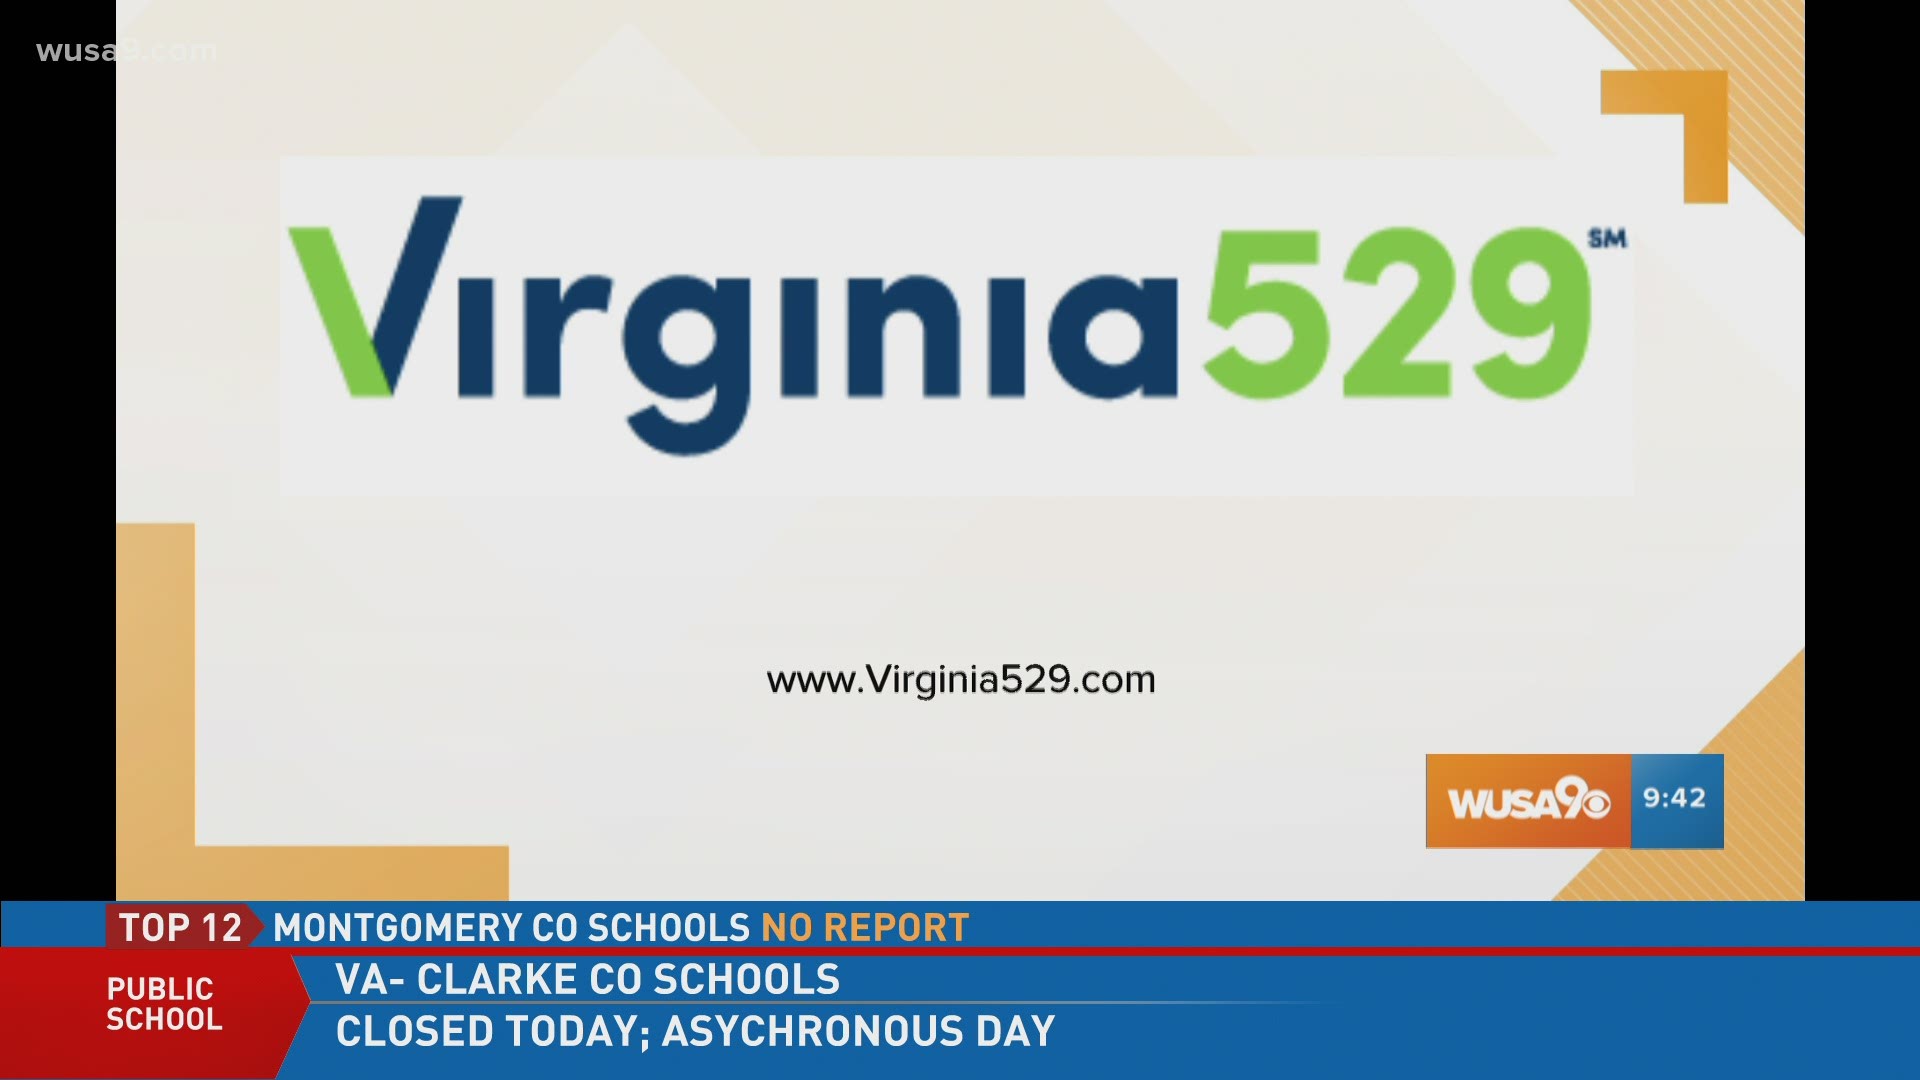 Sponsored by Virginia529. Visit Virginia529.com for more information.